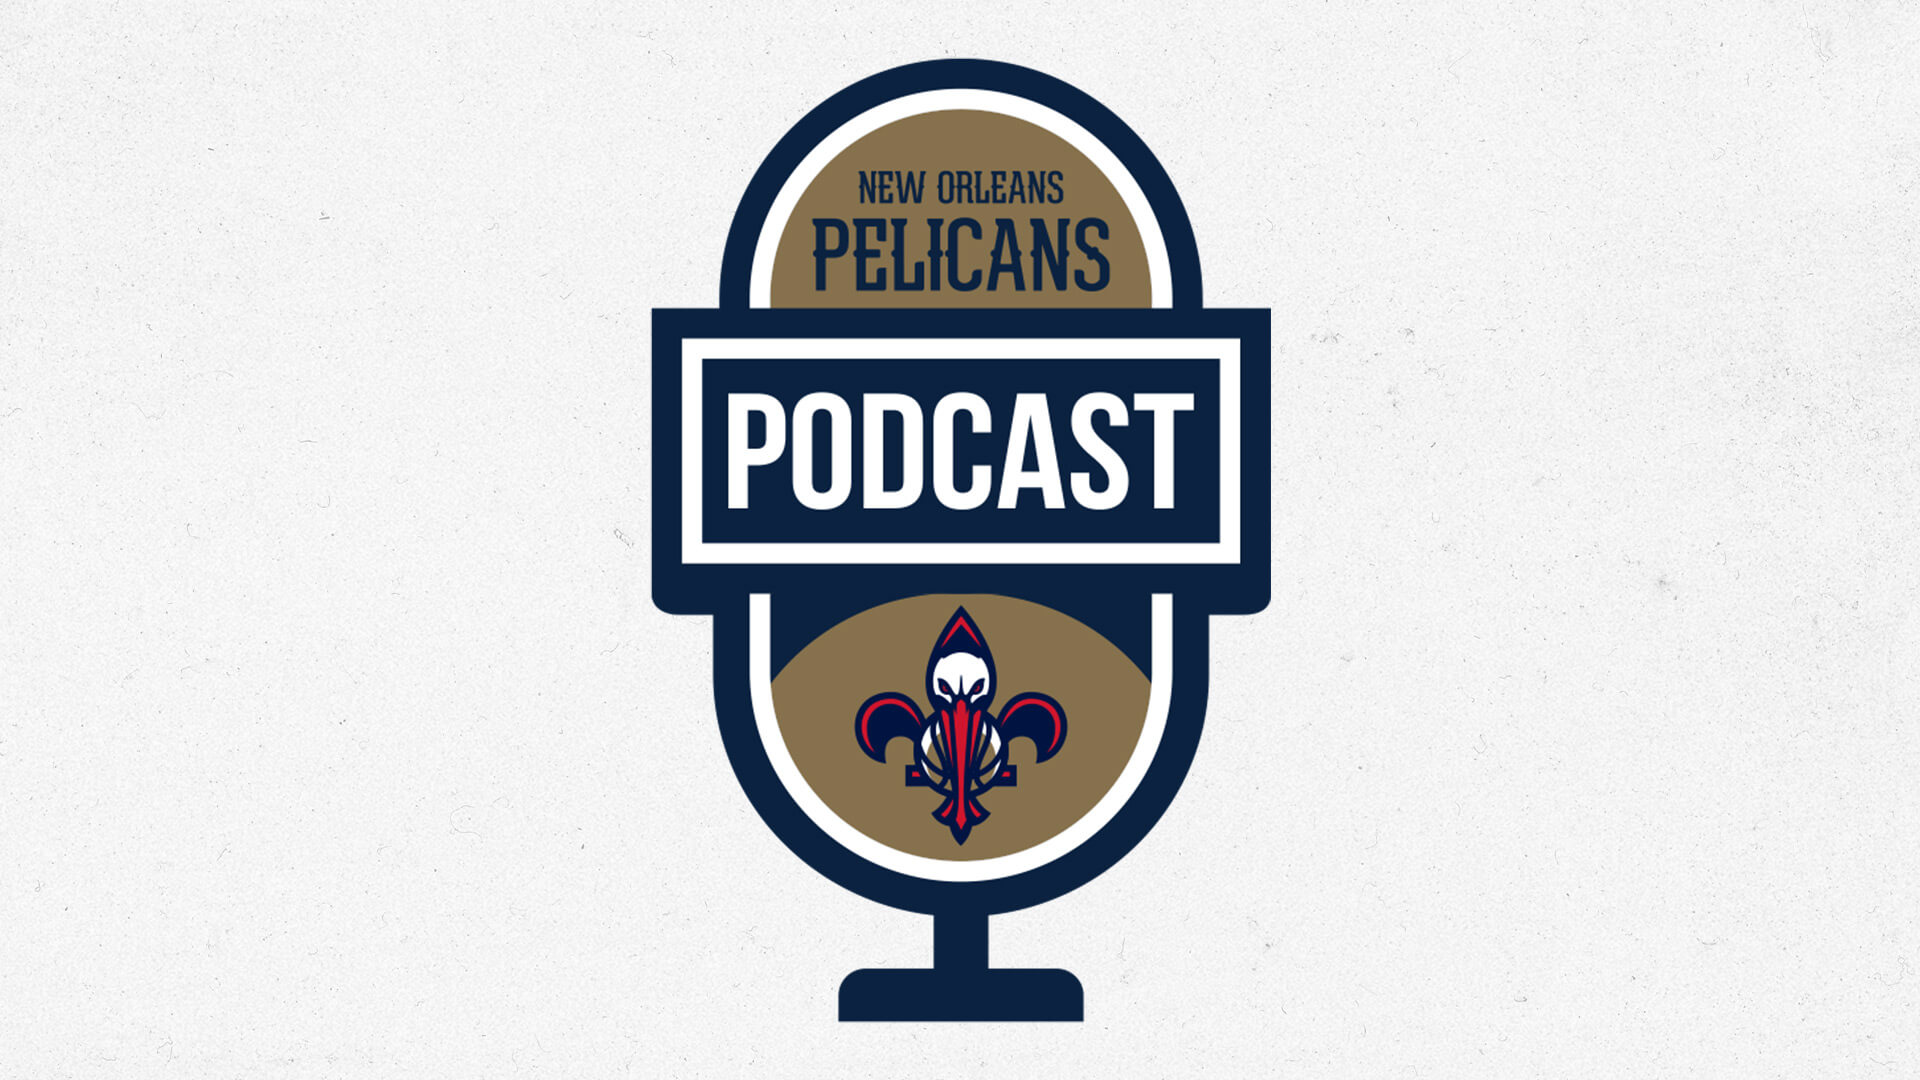 Antonio Daniels on team progress, San Antonio Spurs game | Pelicans Podcast